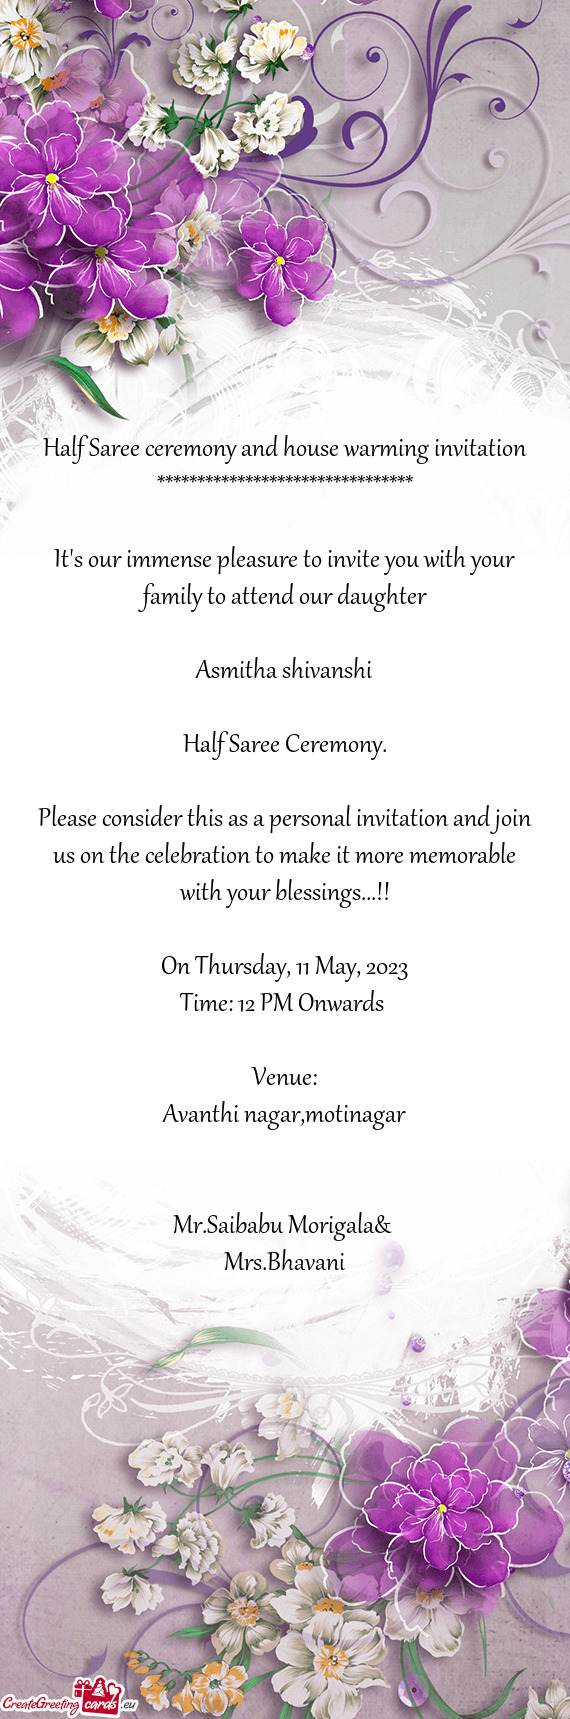 Half Saree ceremony and house warming invitation